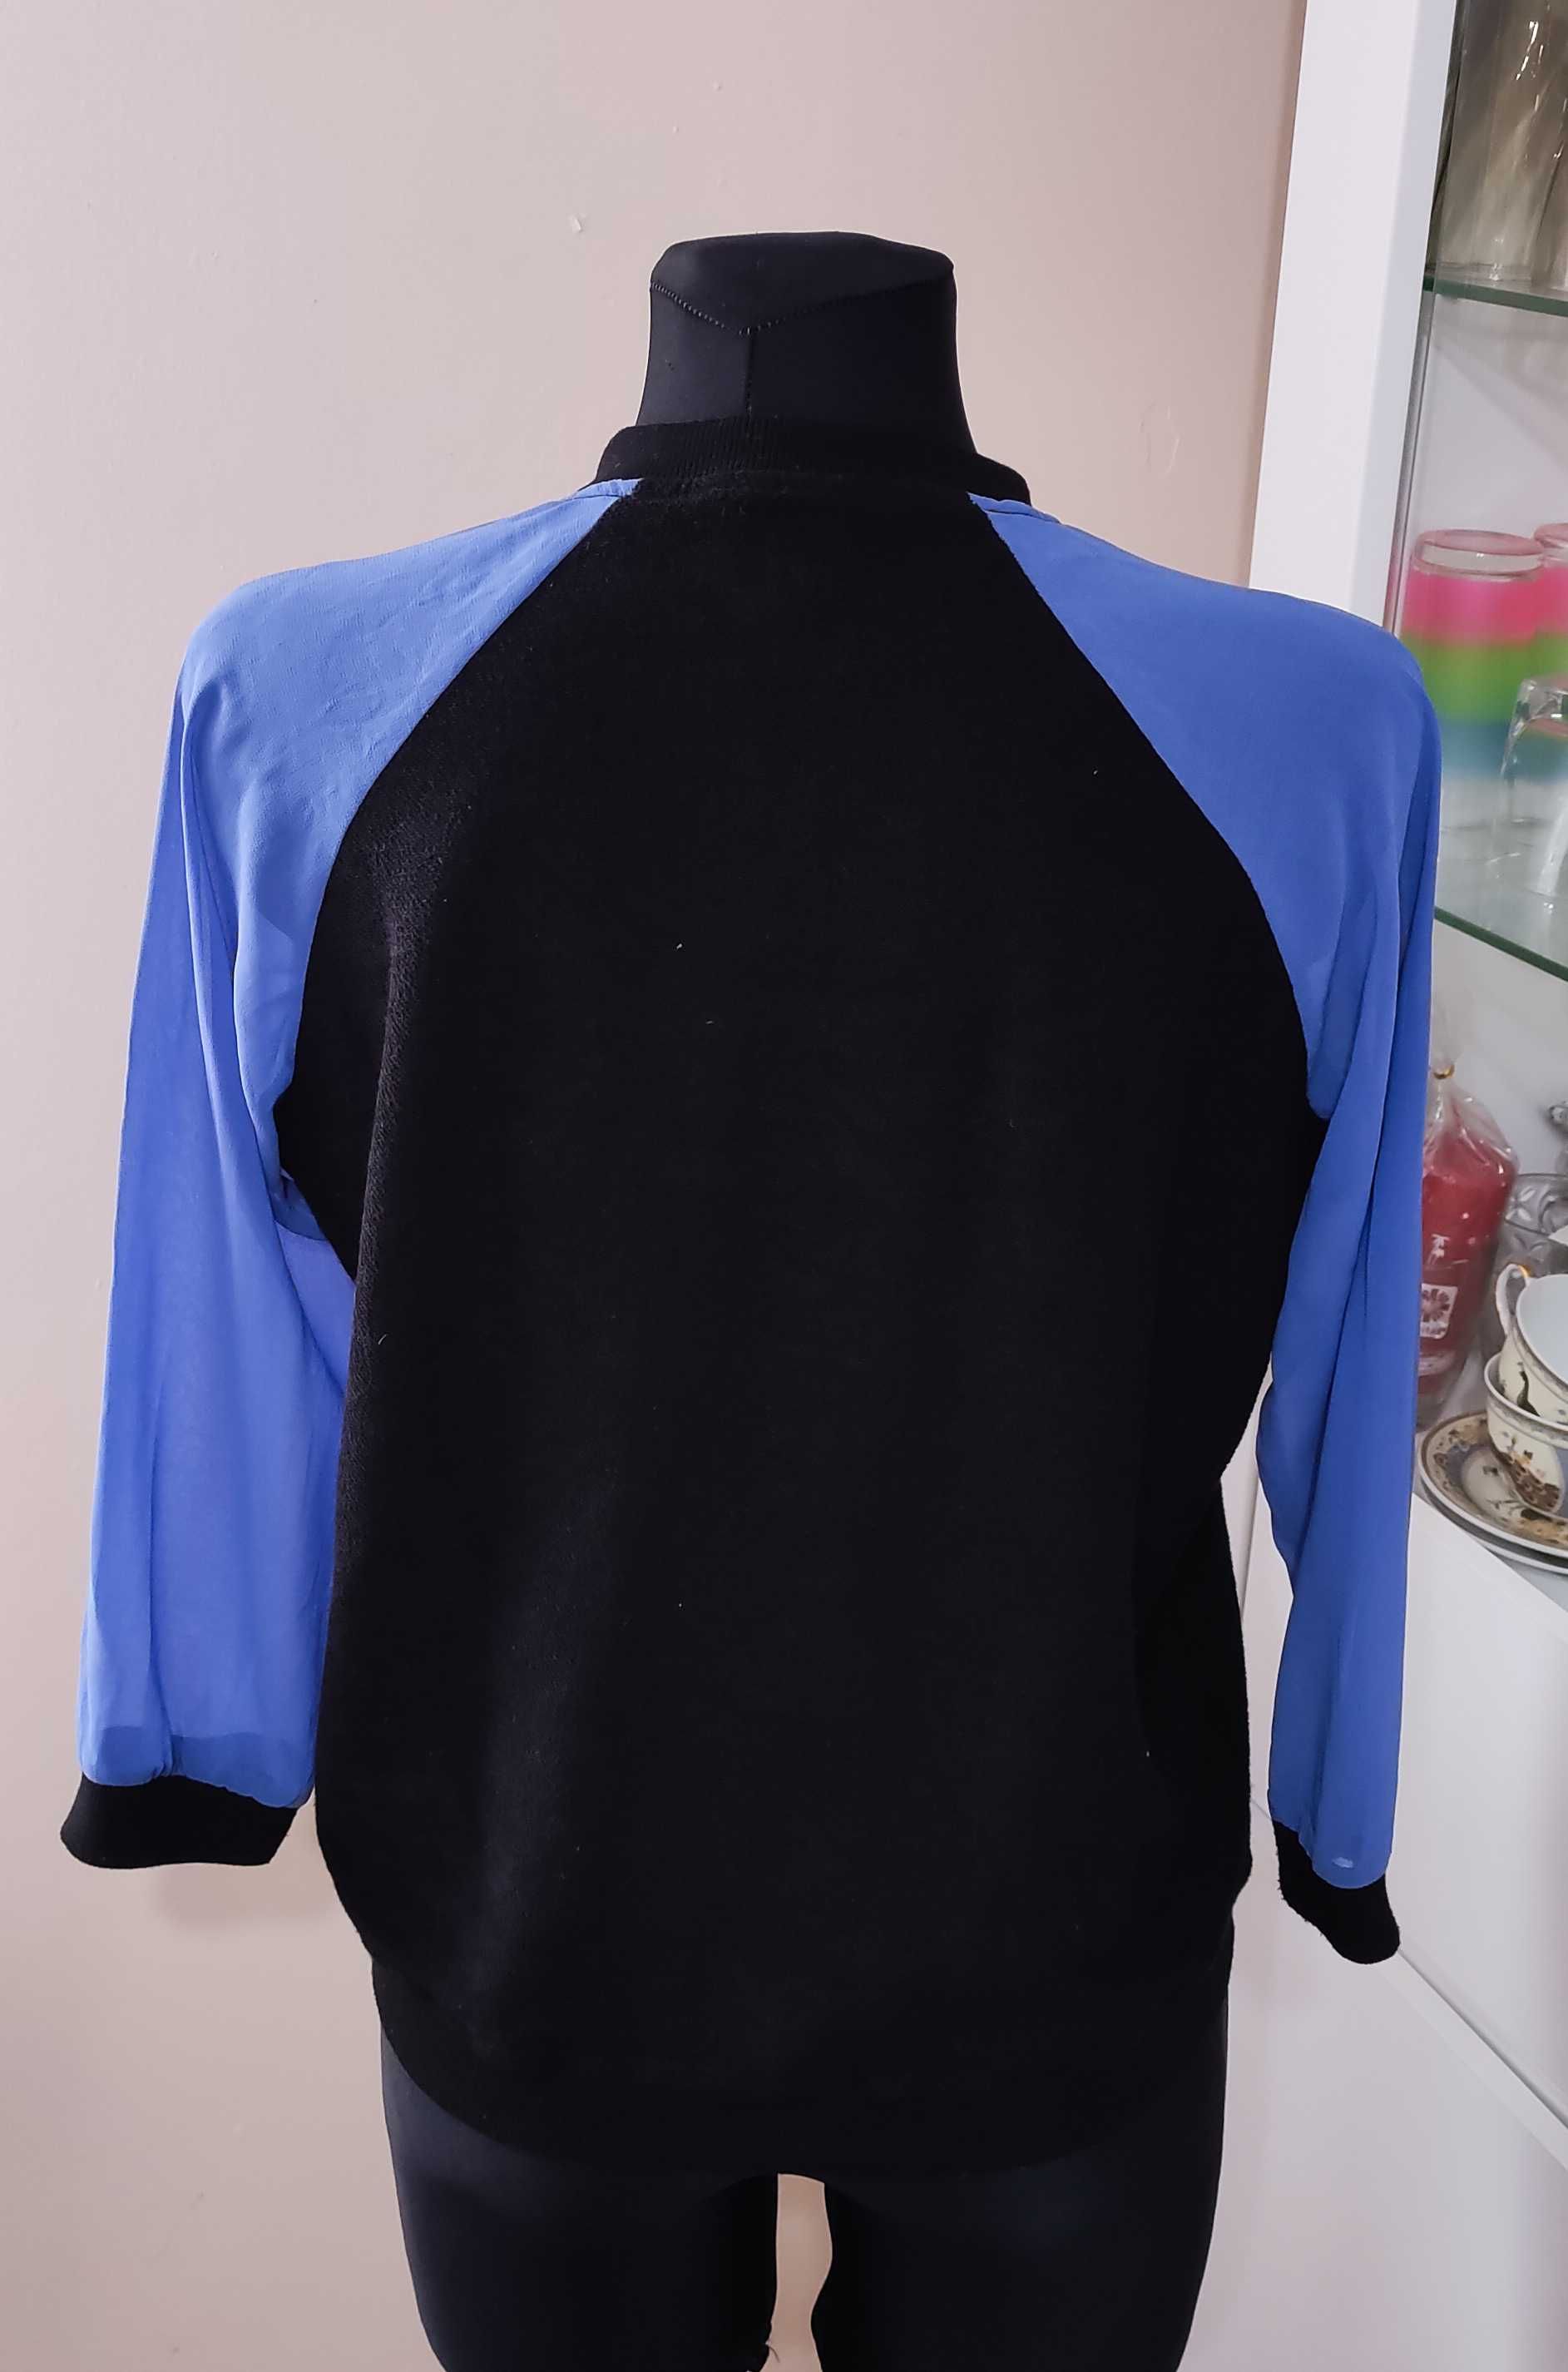 Bluza Sinsay bluzka sweterek czarna fiolet siateczka na suwak